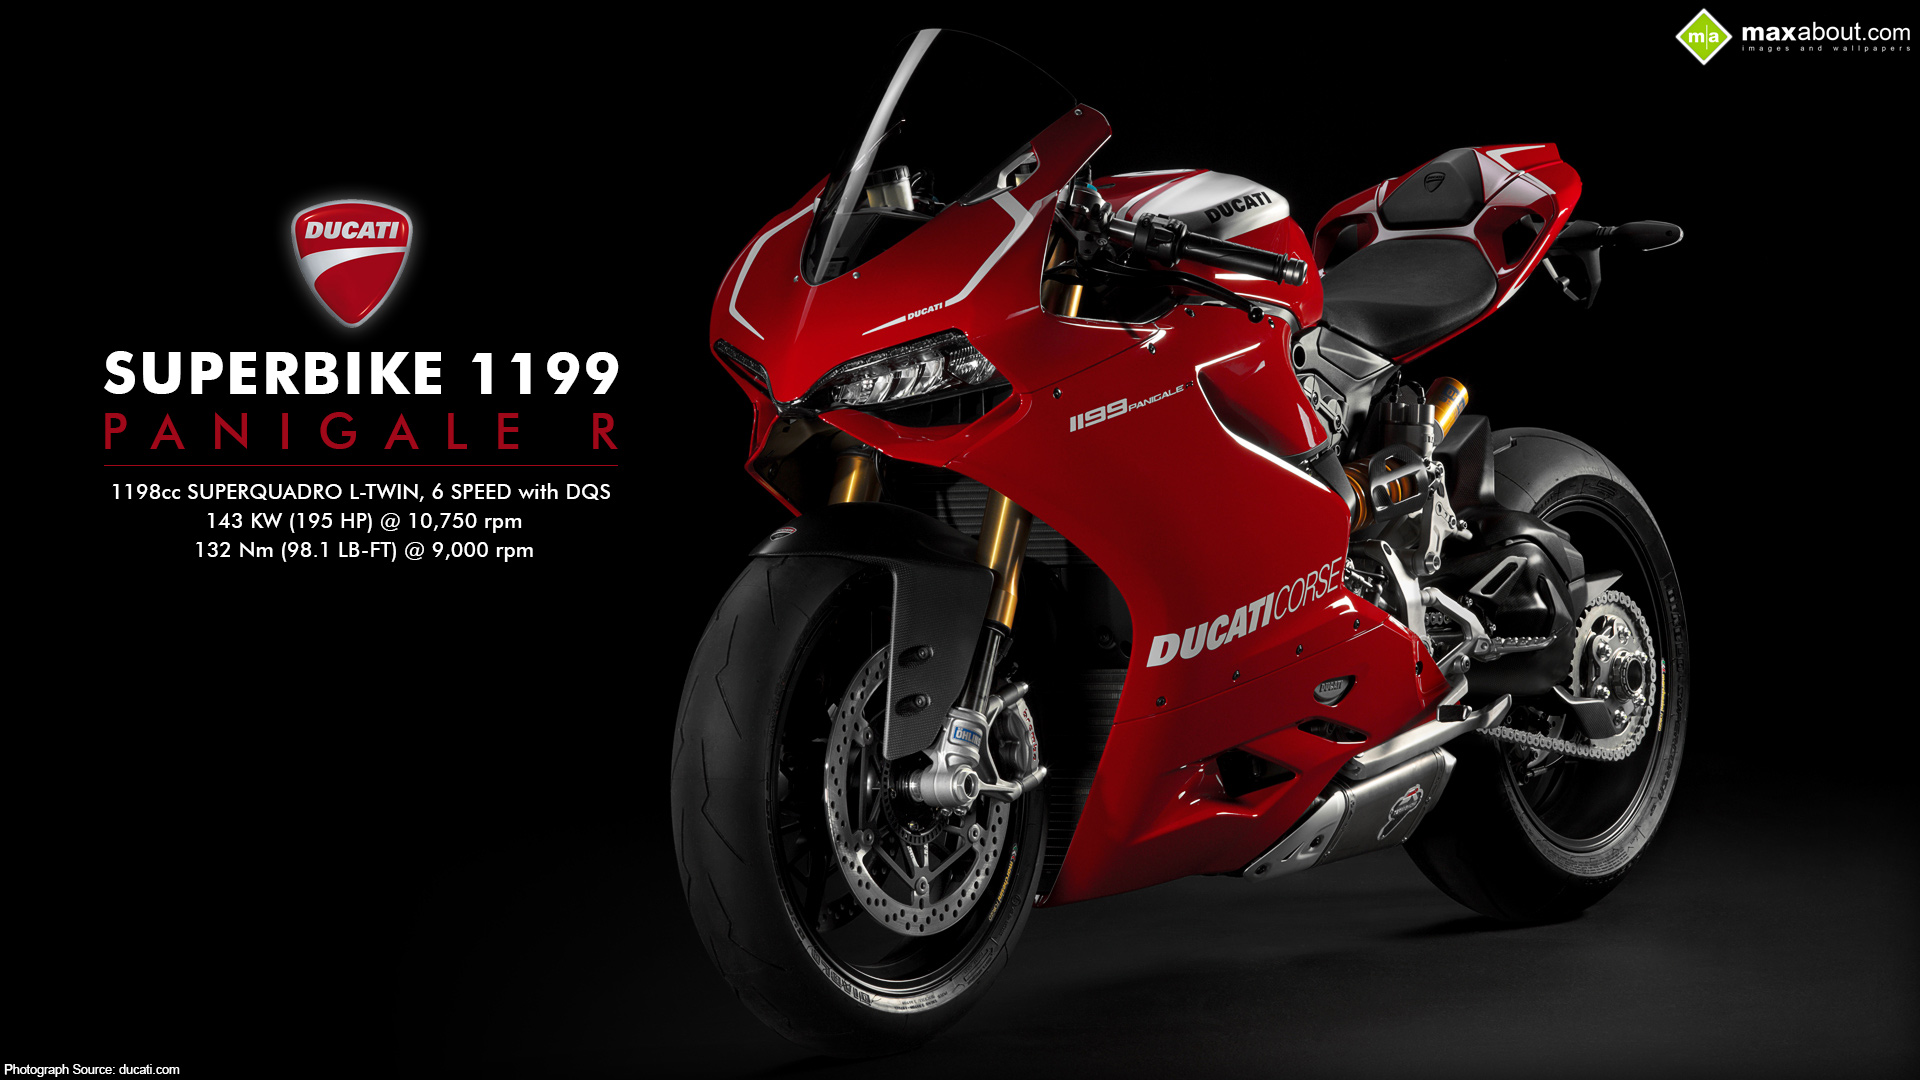 Ducati Superbike 1199 Panigale R wallpaper   1117739 1920x1080